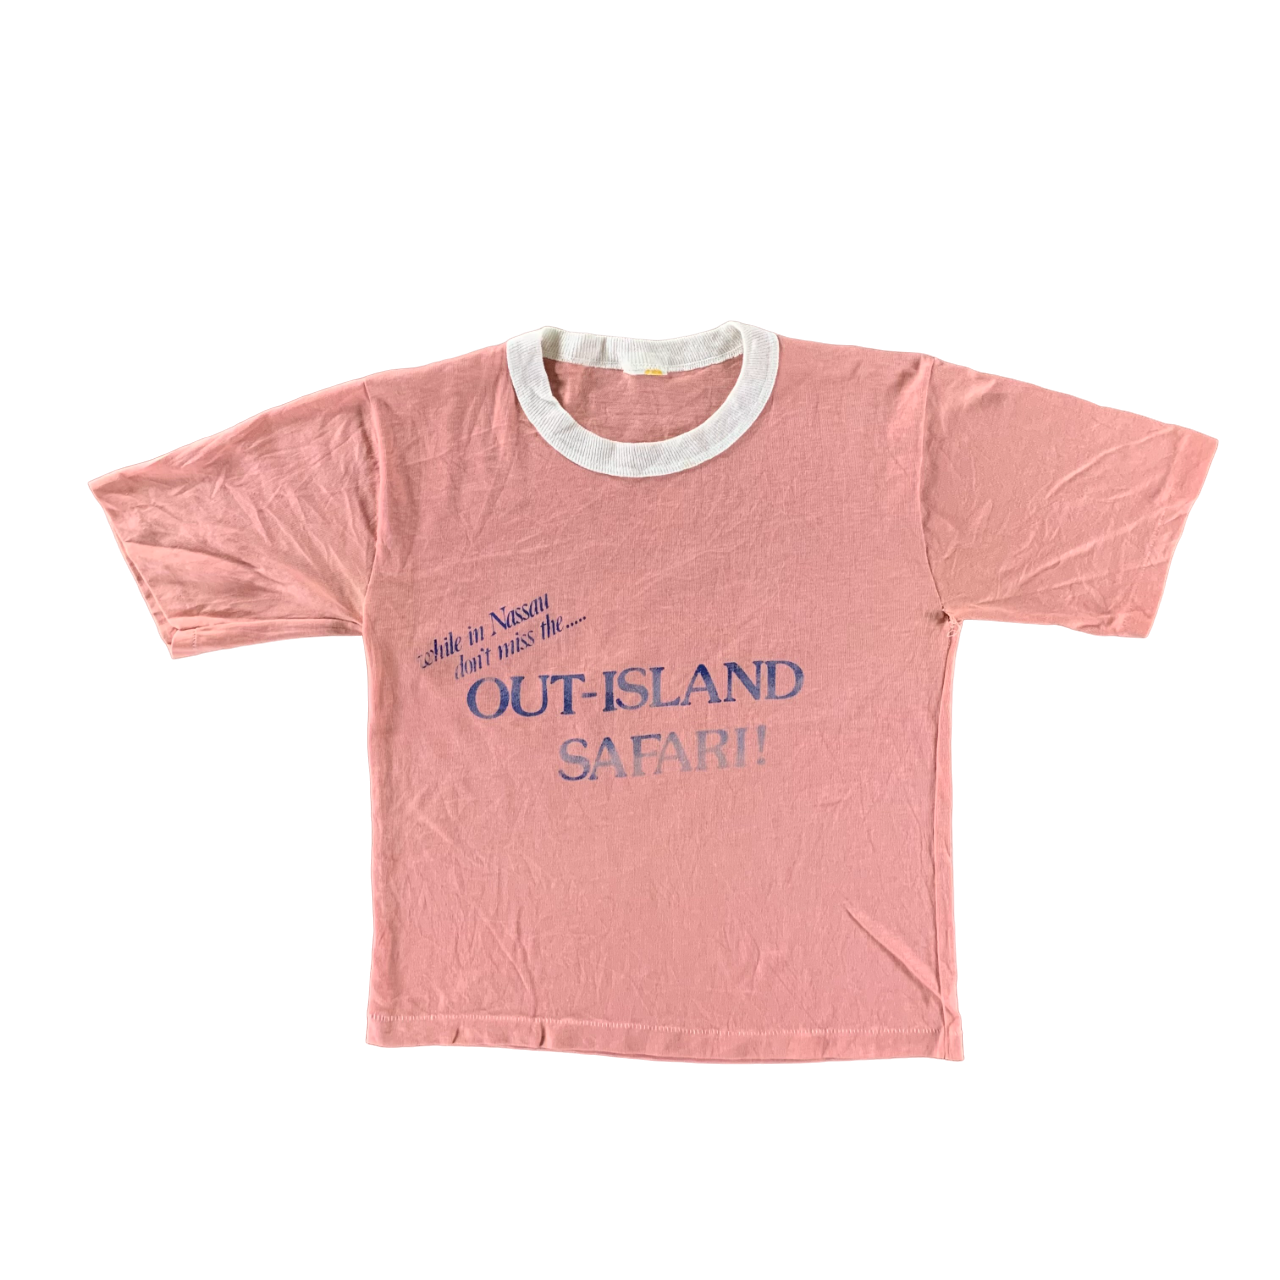 Vintage 1980s Nassau Bahamas T-shirt size Medium